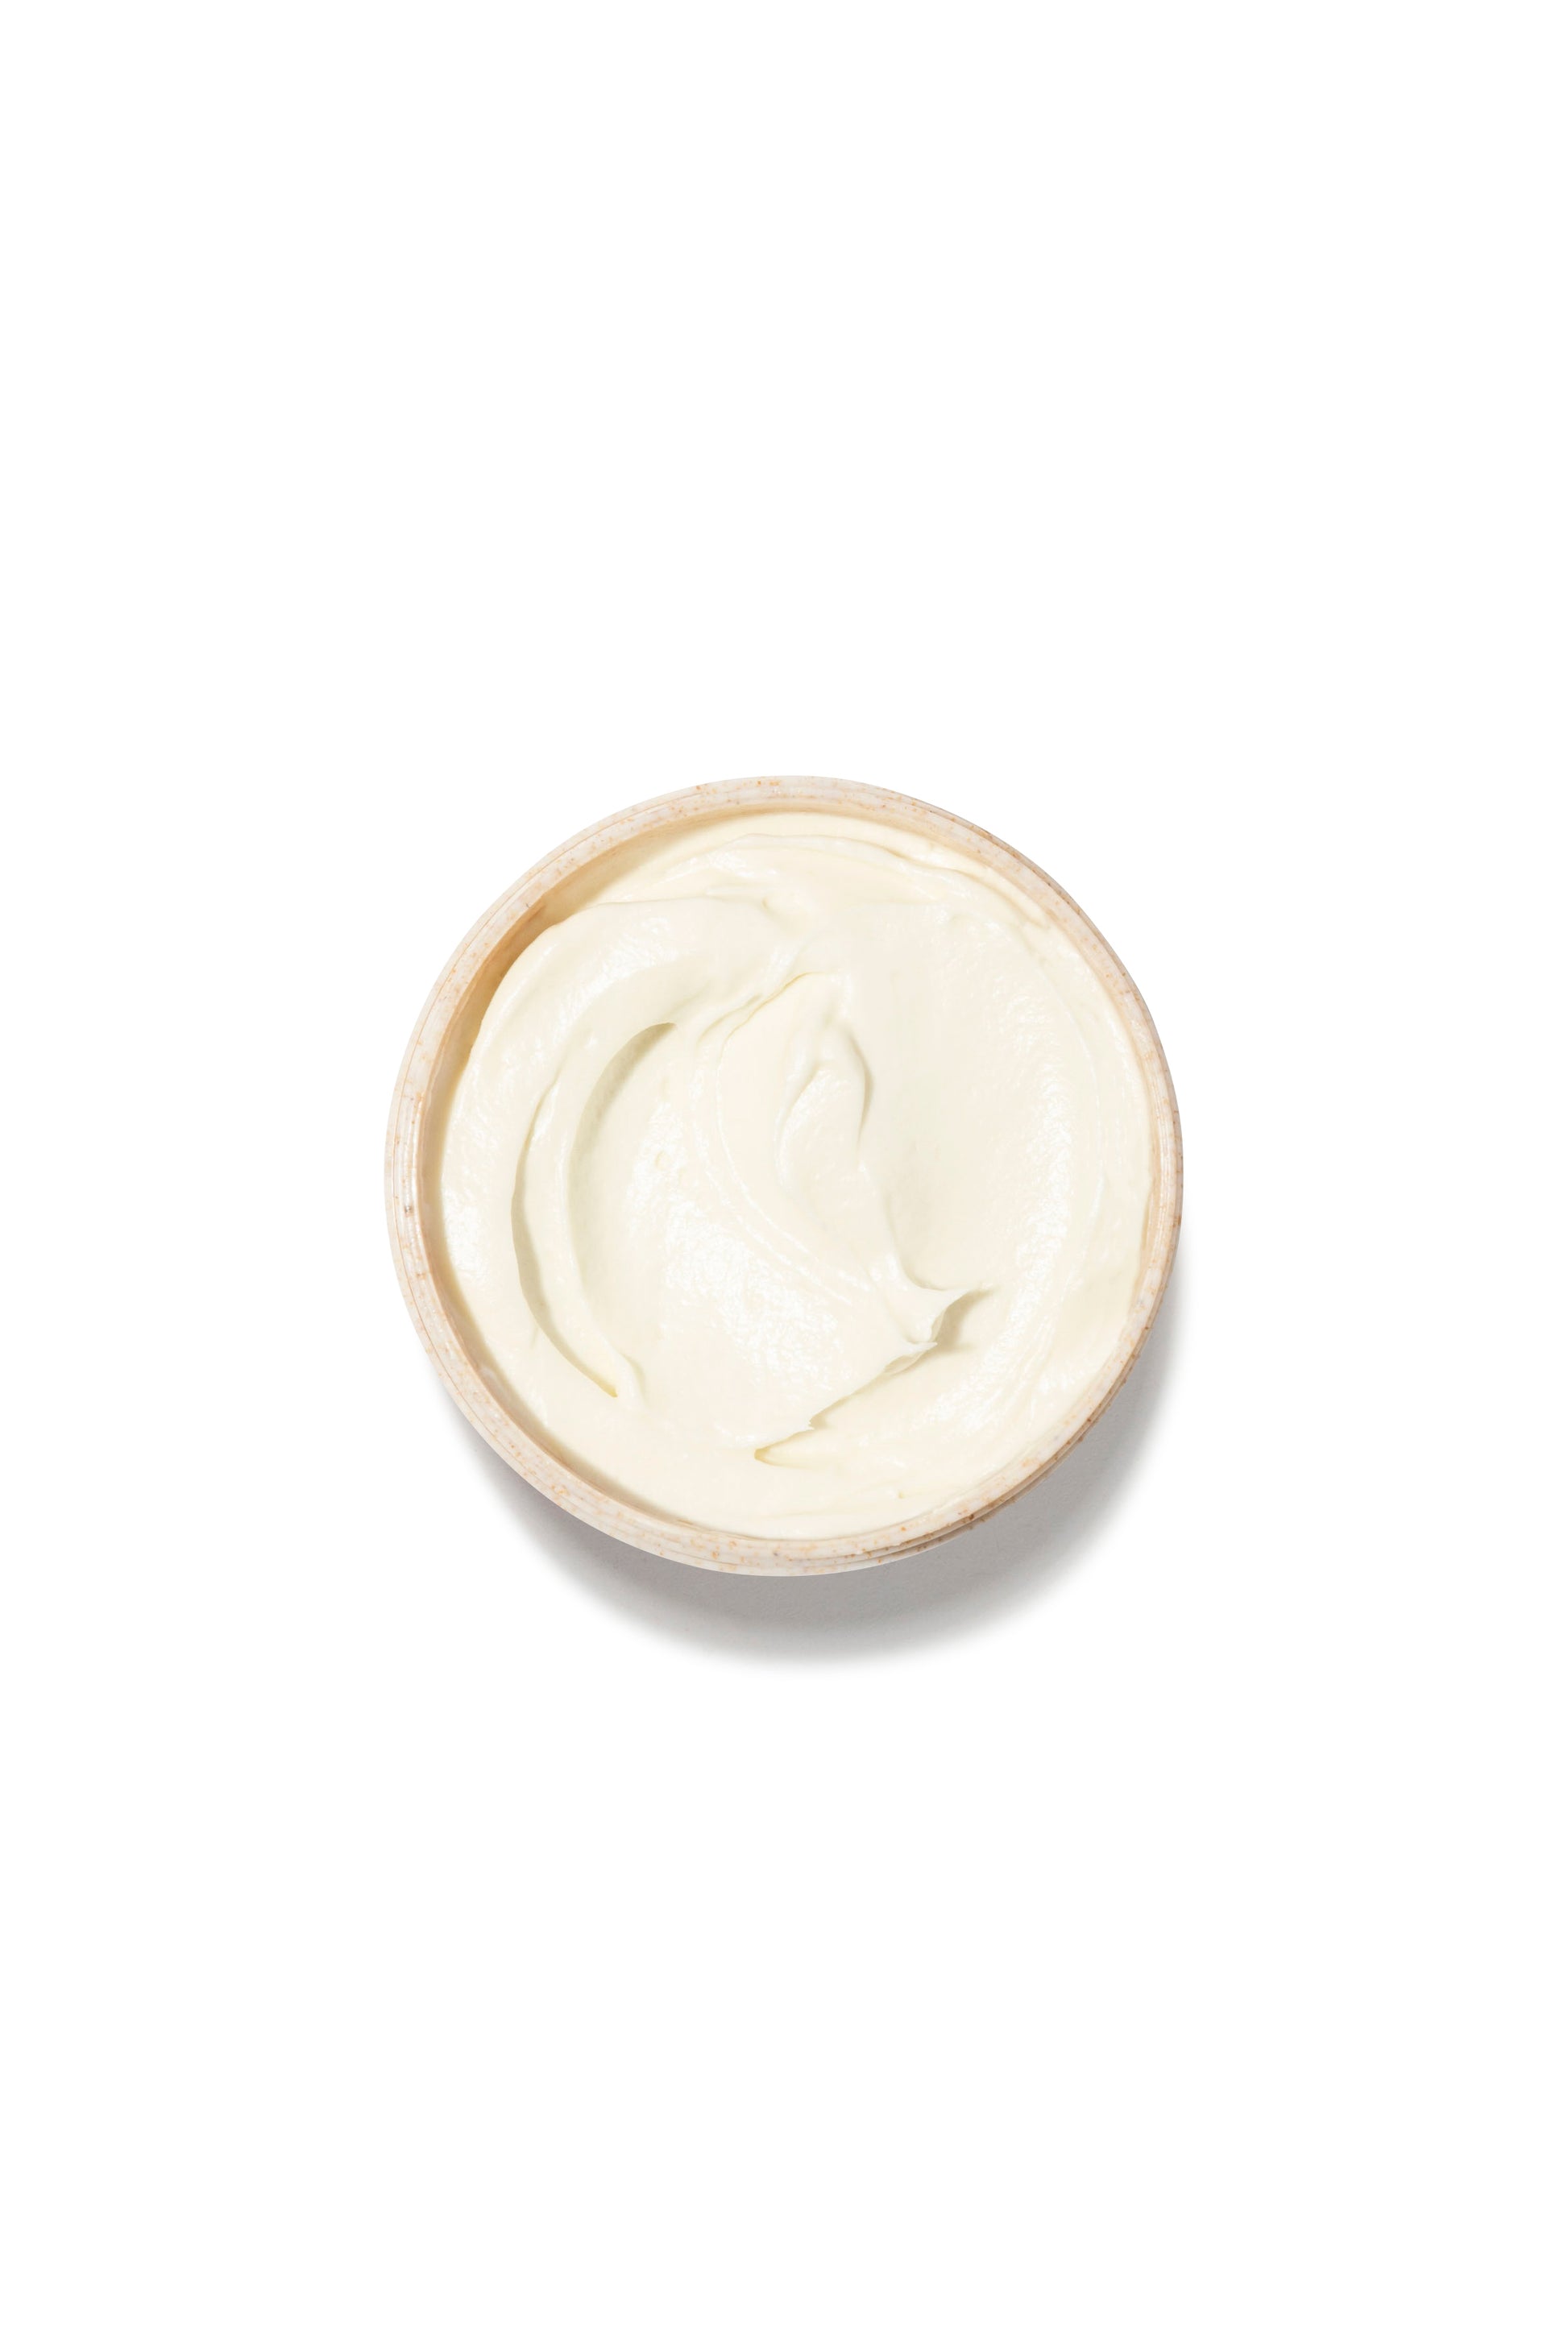 Beurre Shea Butter Body Cream (Vanilla) - Le Beurre Shop